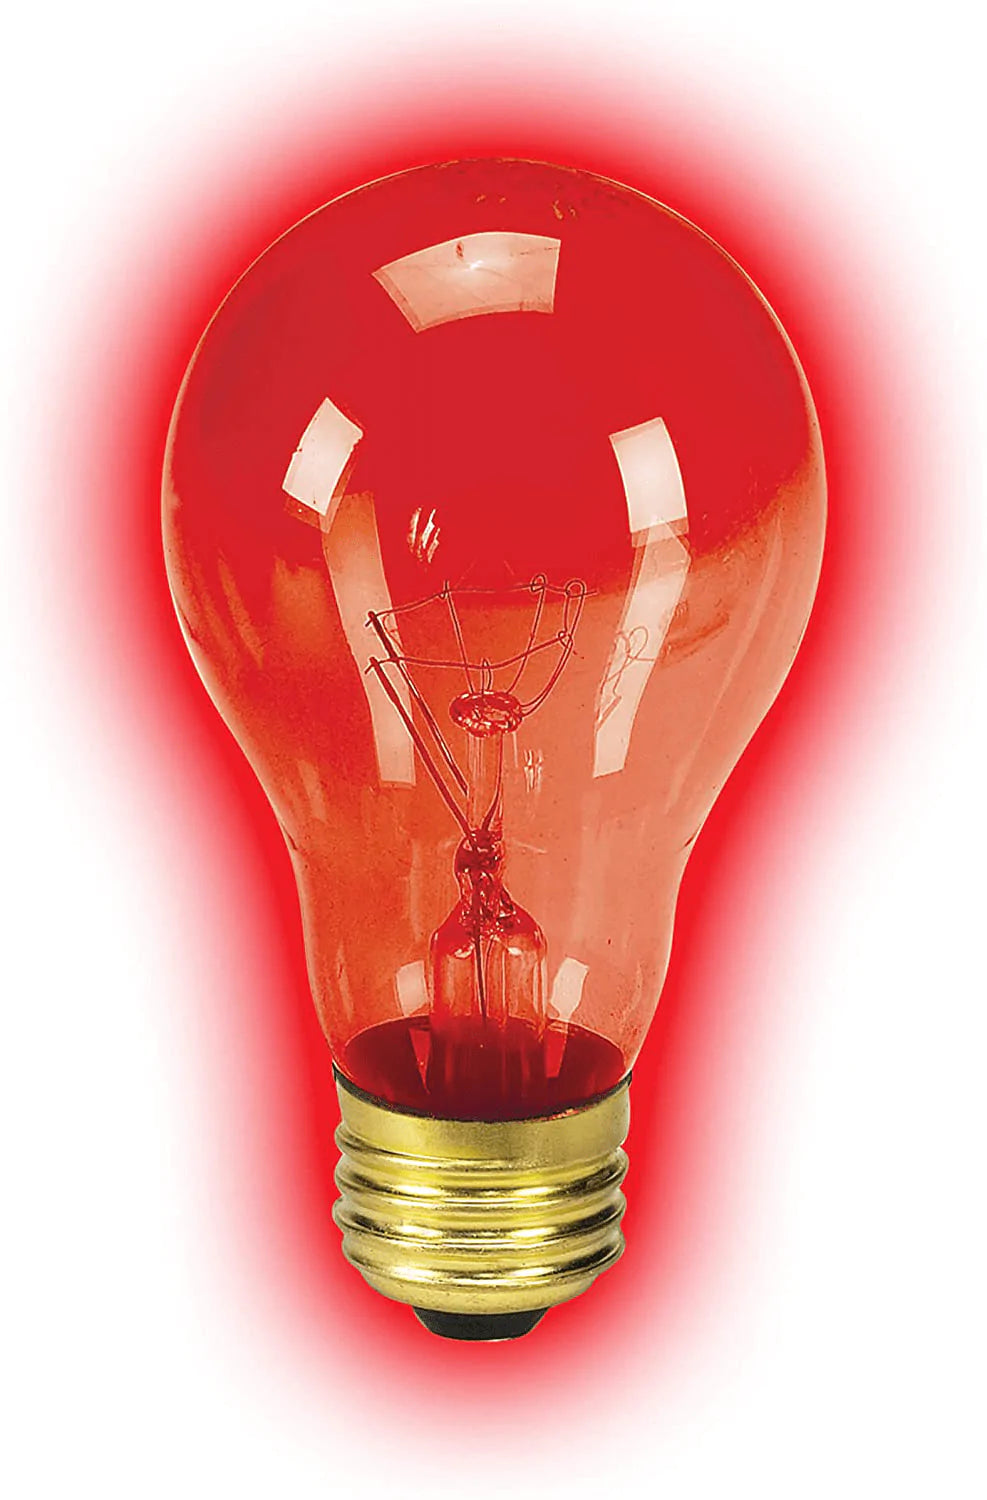 Zilla Reptile Terrarium Heat Lamps Incandescent Bulb, Night Red, 50W